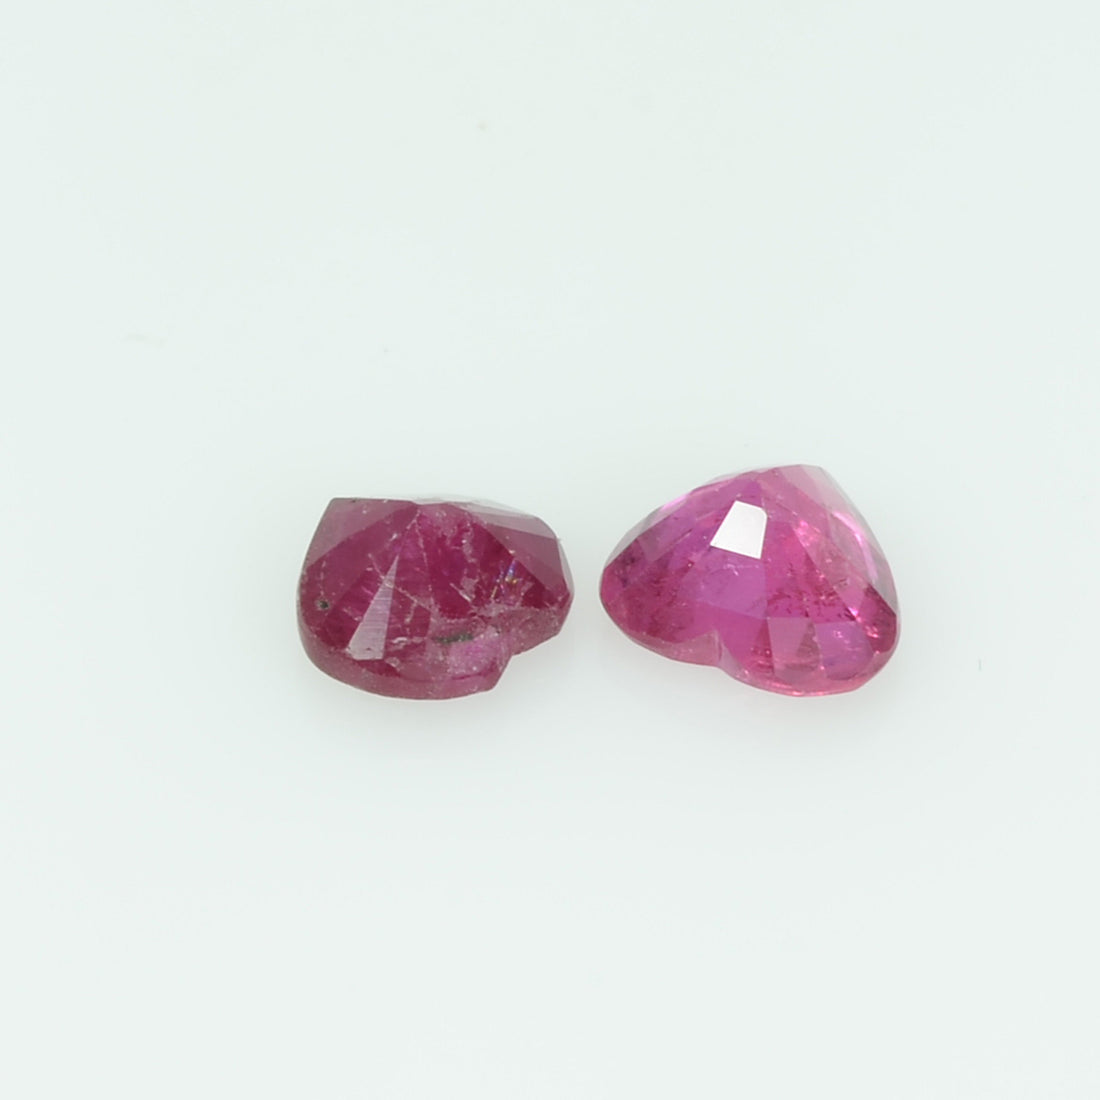 5 Mm Natural Ruby Loose Gemstone Heart Cut - Thai Gems Export Ltd.